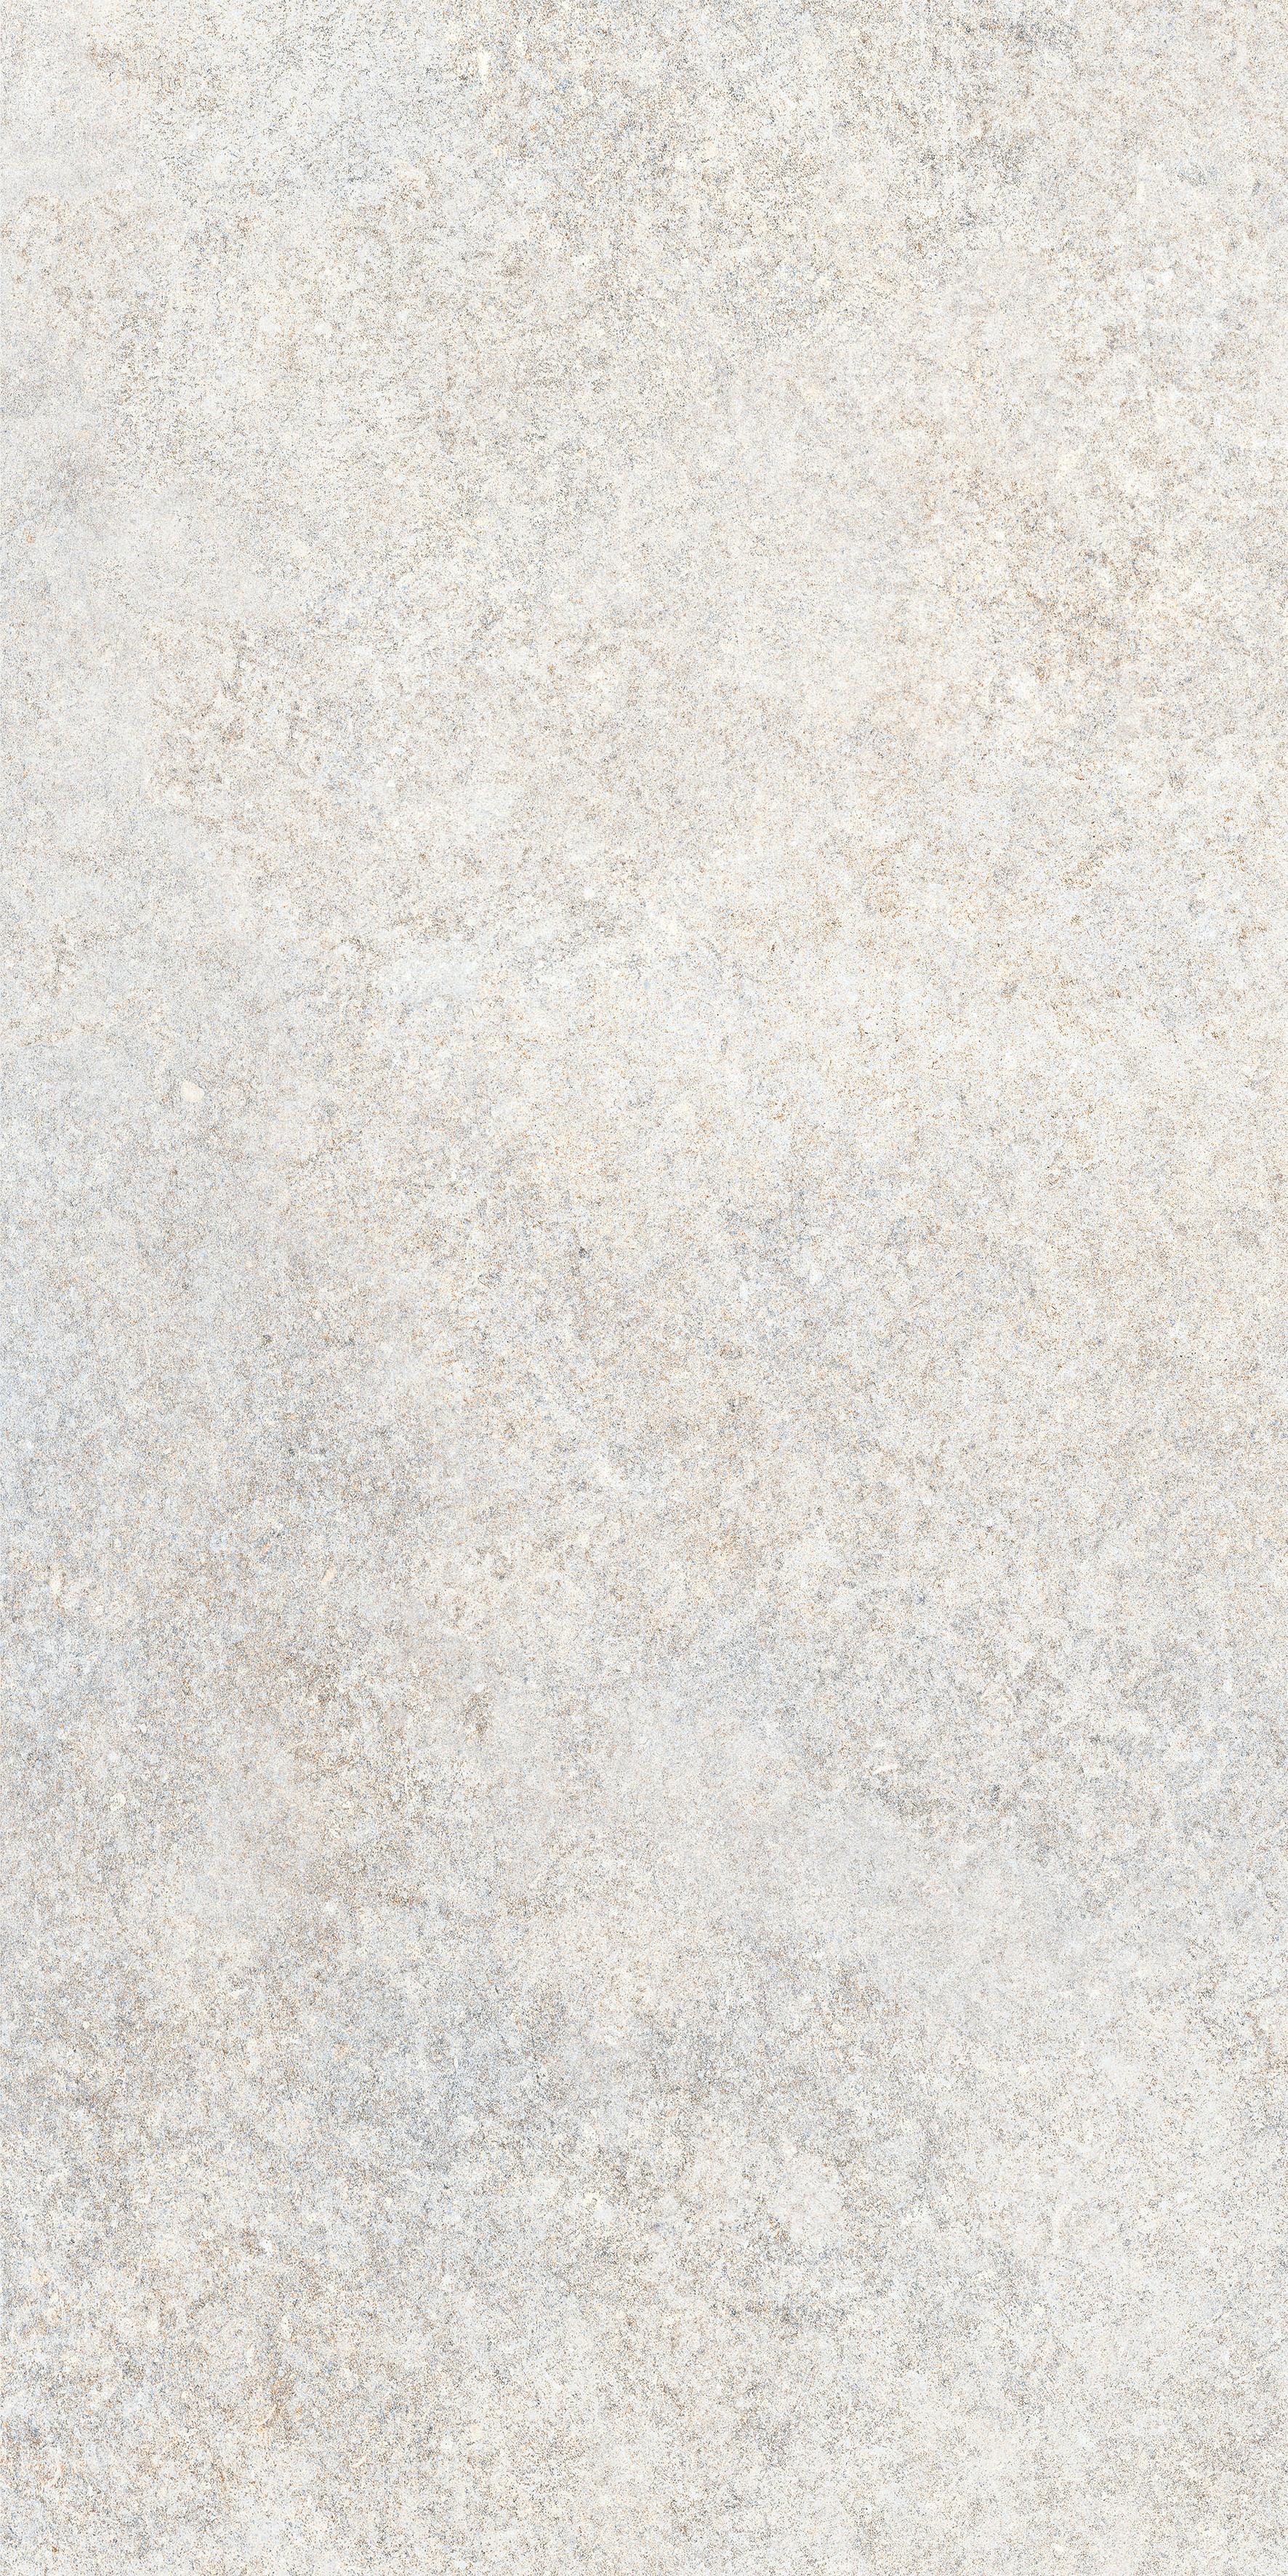 Керамогранит Vitra Stone-X белый матовый 60x120 см, K949743R0001VTEP